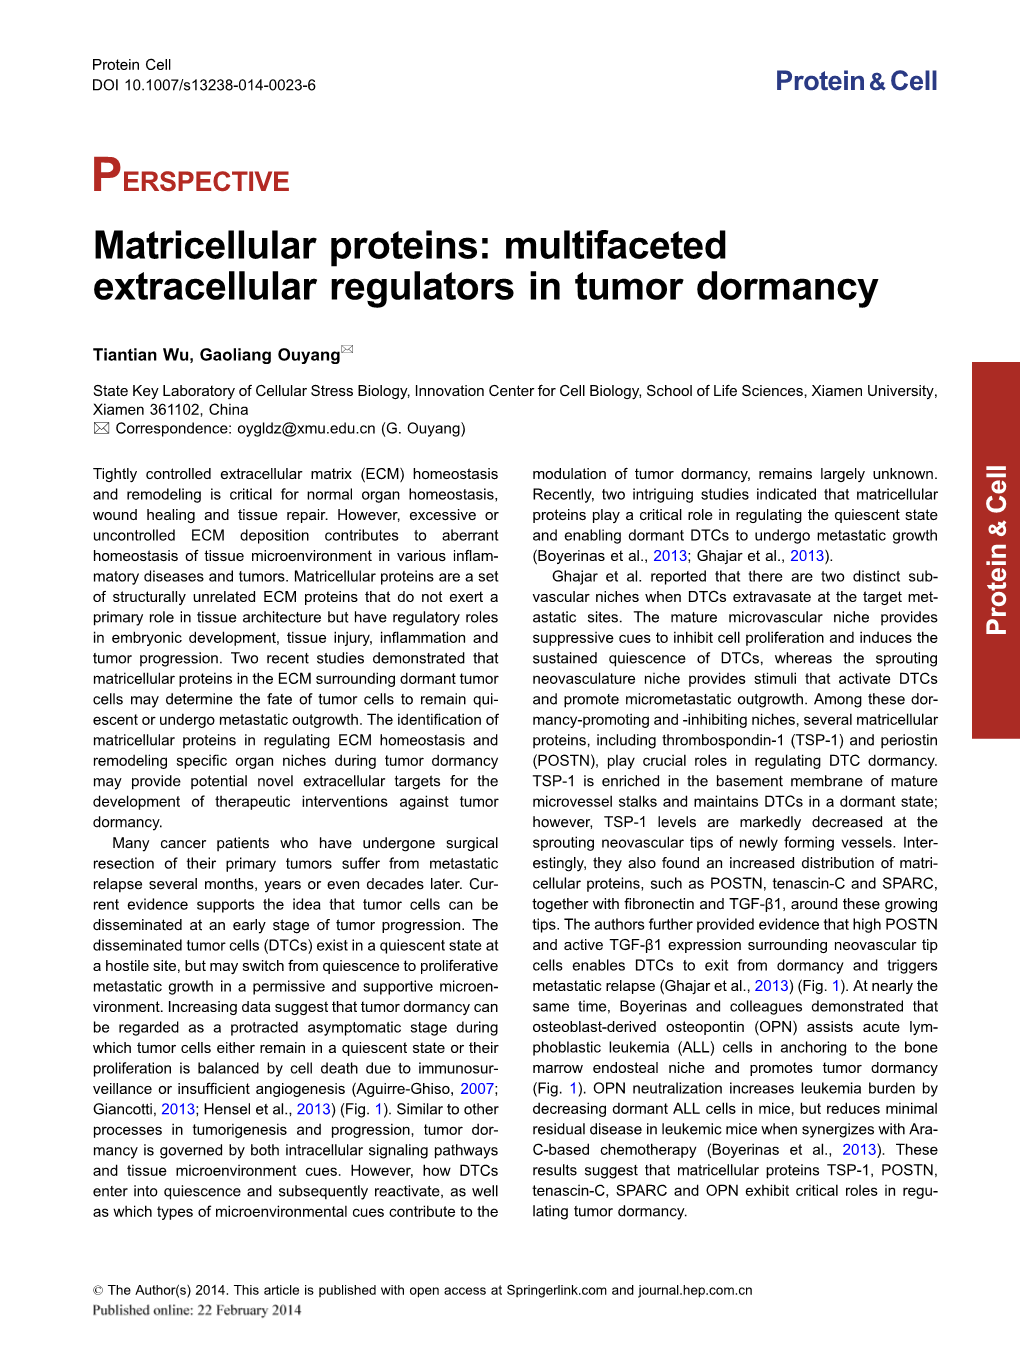 Multifaceted Extracellular Regulators in Tumor Dormancy